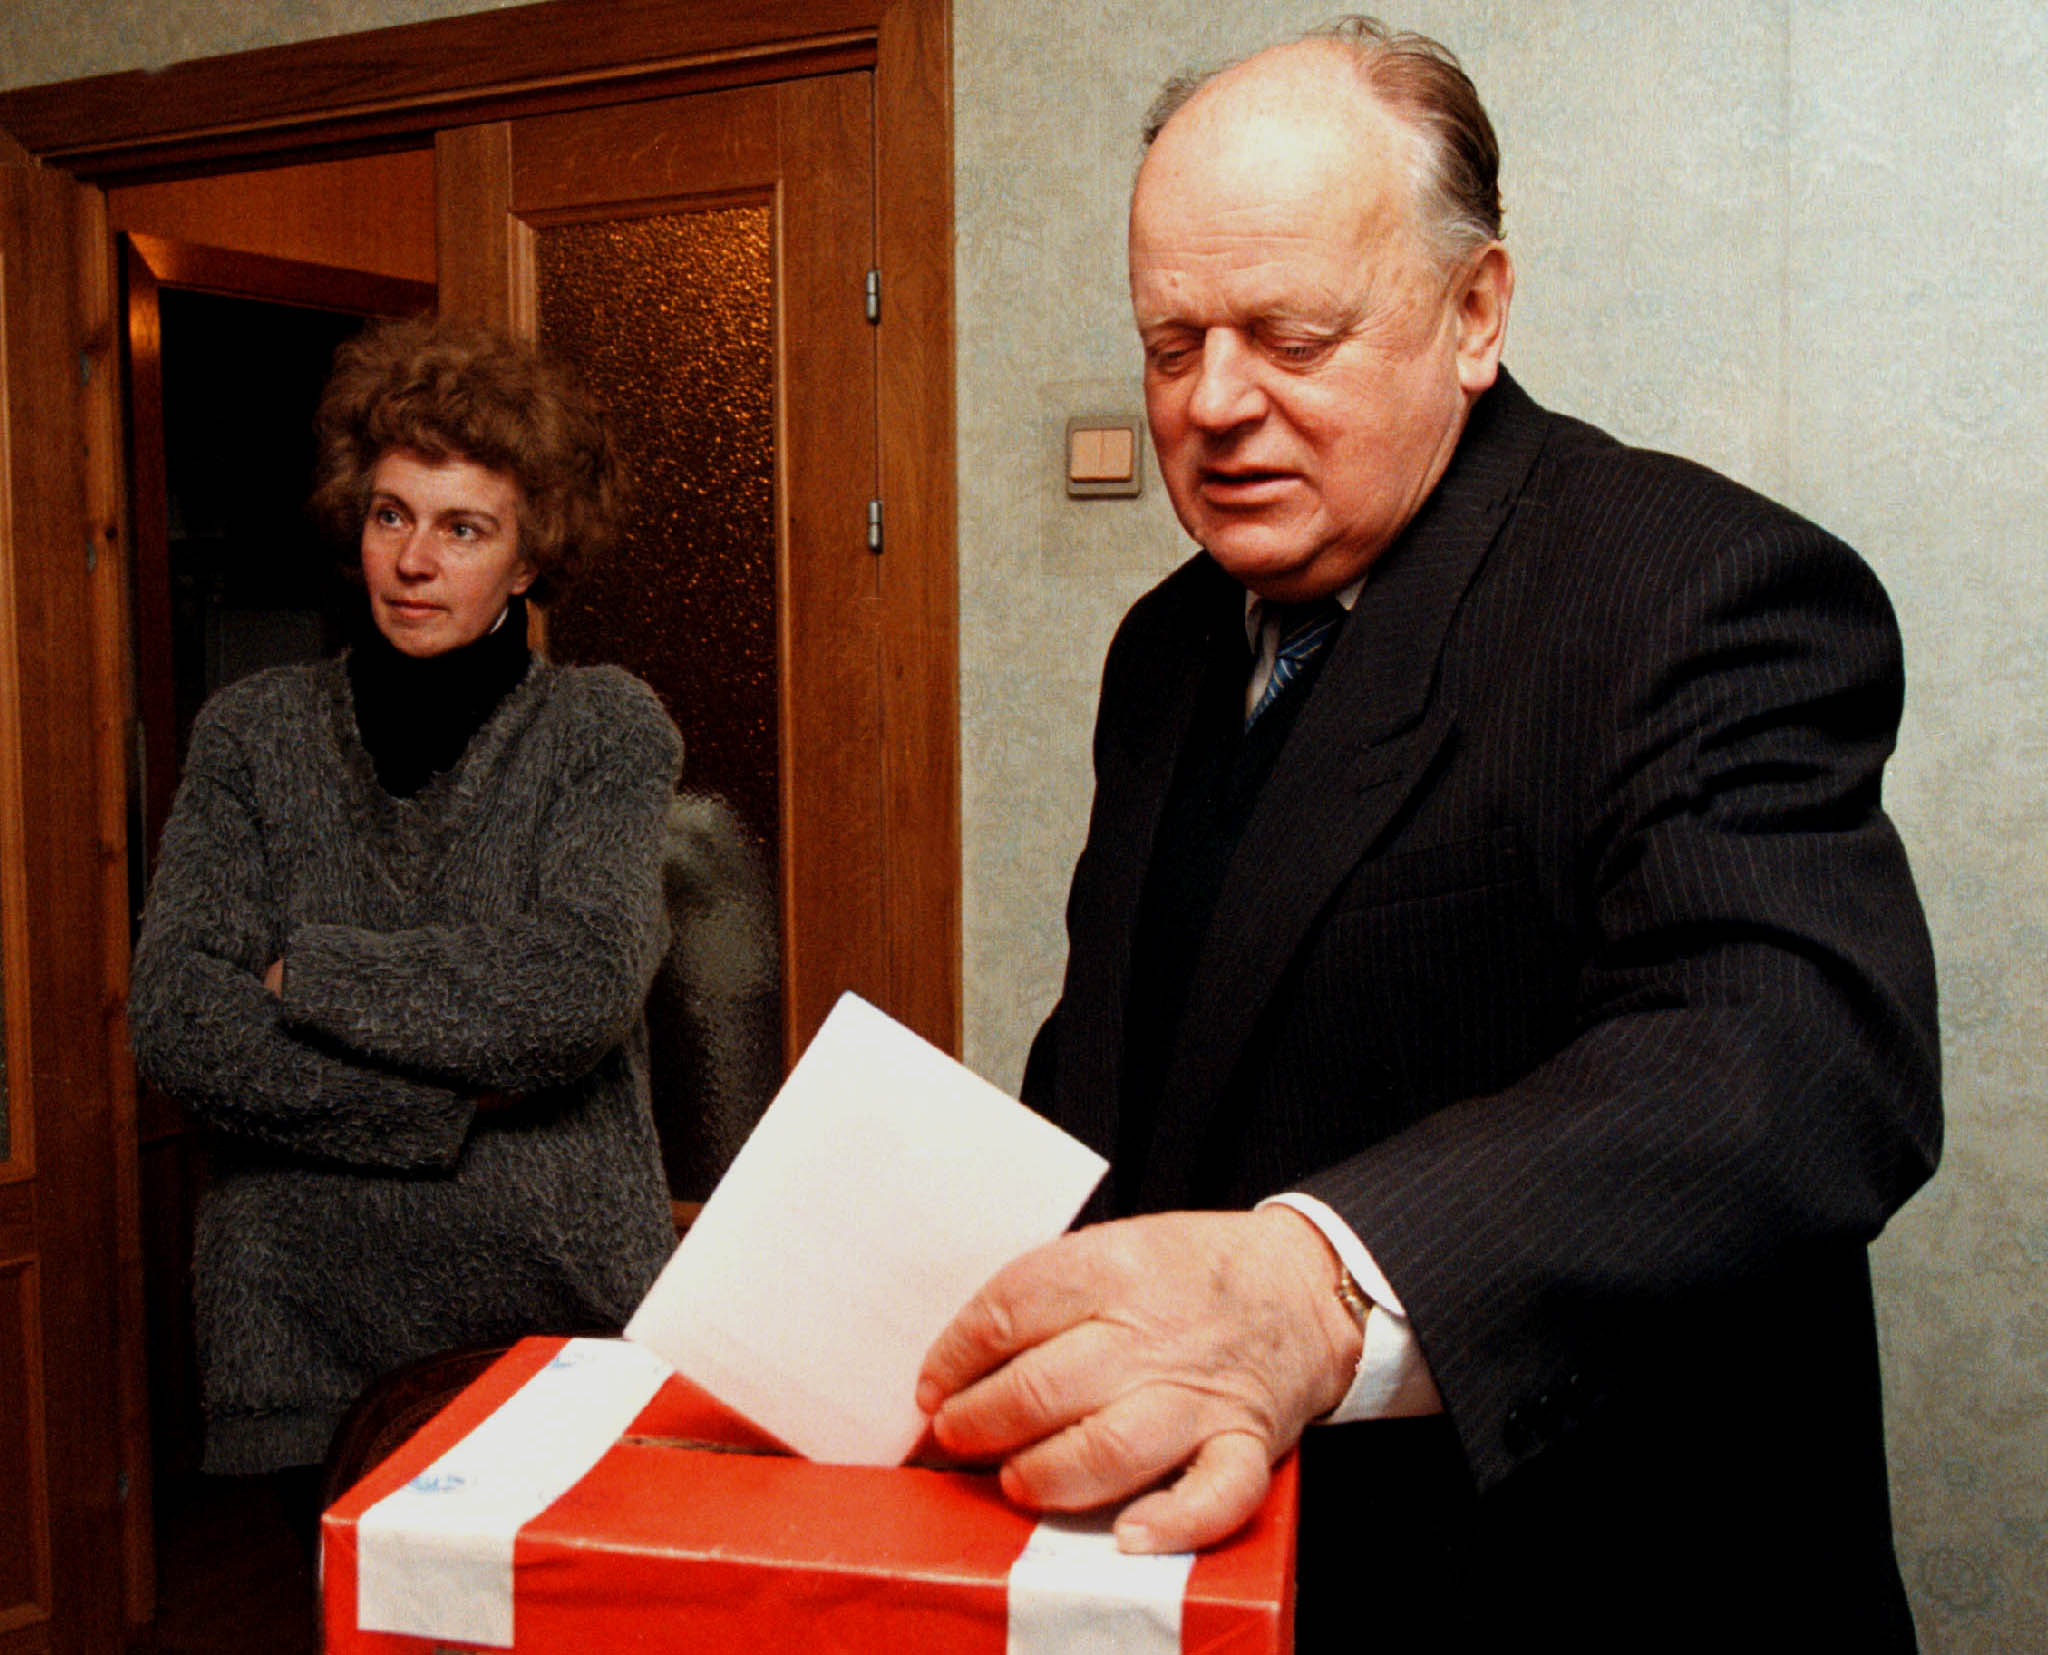 Former speaker of Belarussian parliament Stanislav Shushkevich drops his voting ballot in a box